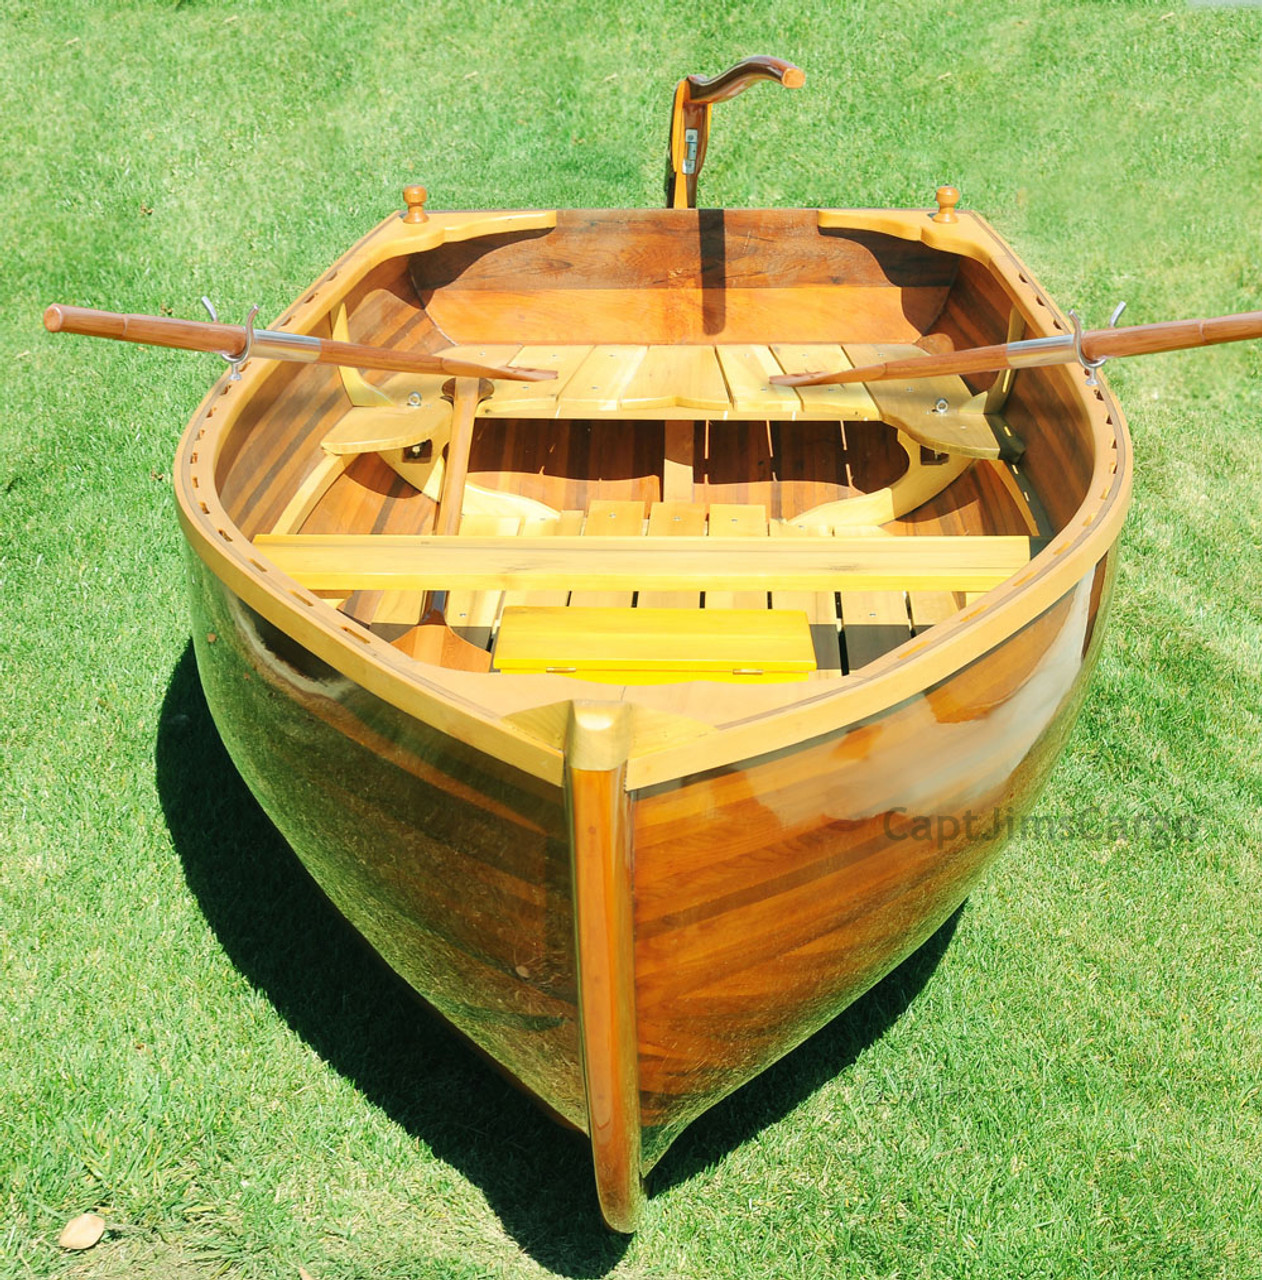 Cedar Rowboat Dingy 9.87' Wood Strip Built Gloss Finish Tender